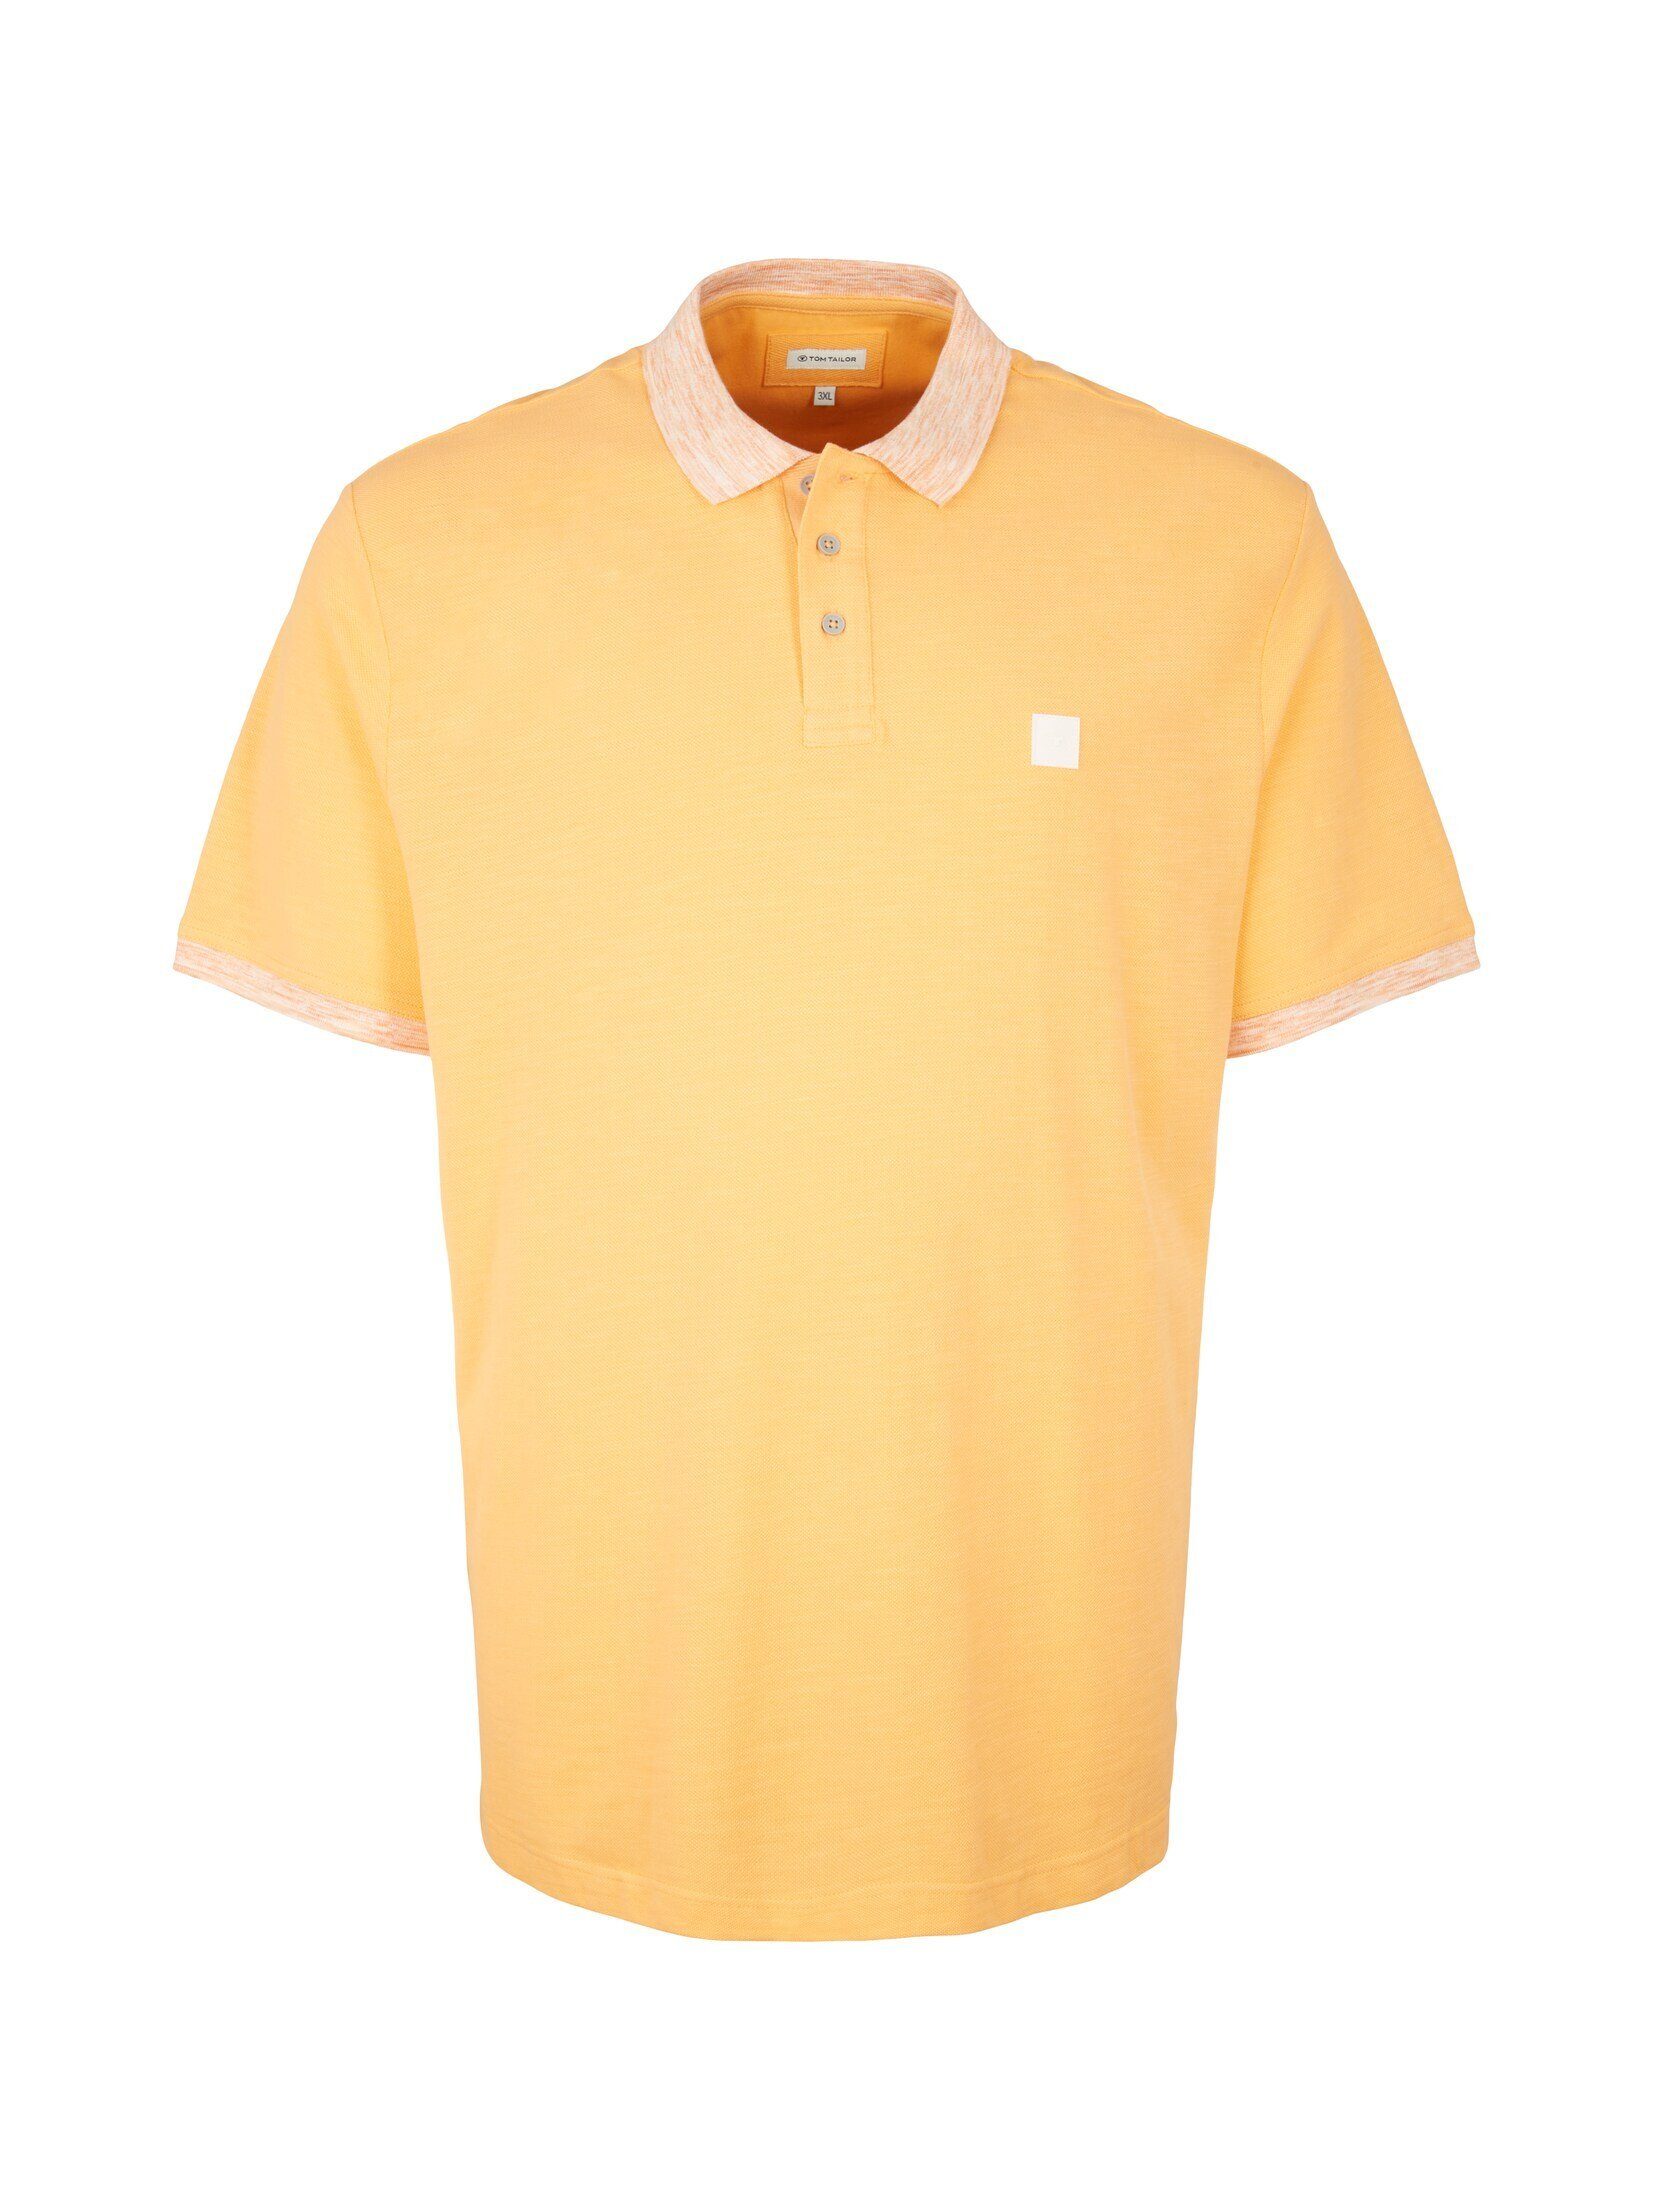 Strukturiertes TAILOR Poloshirt Plus - orange Poloshirt TOM out washed PLUS